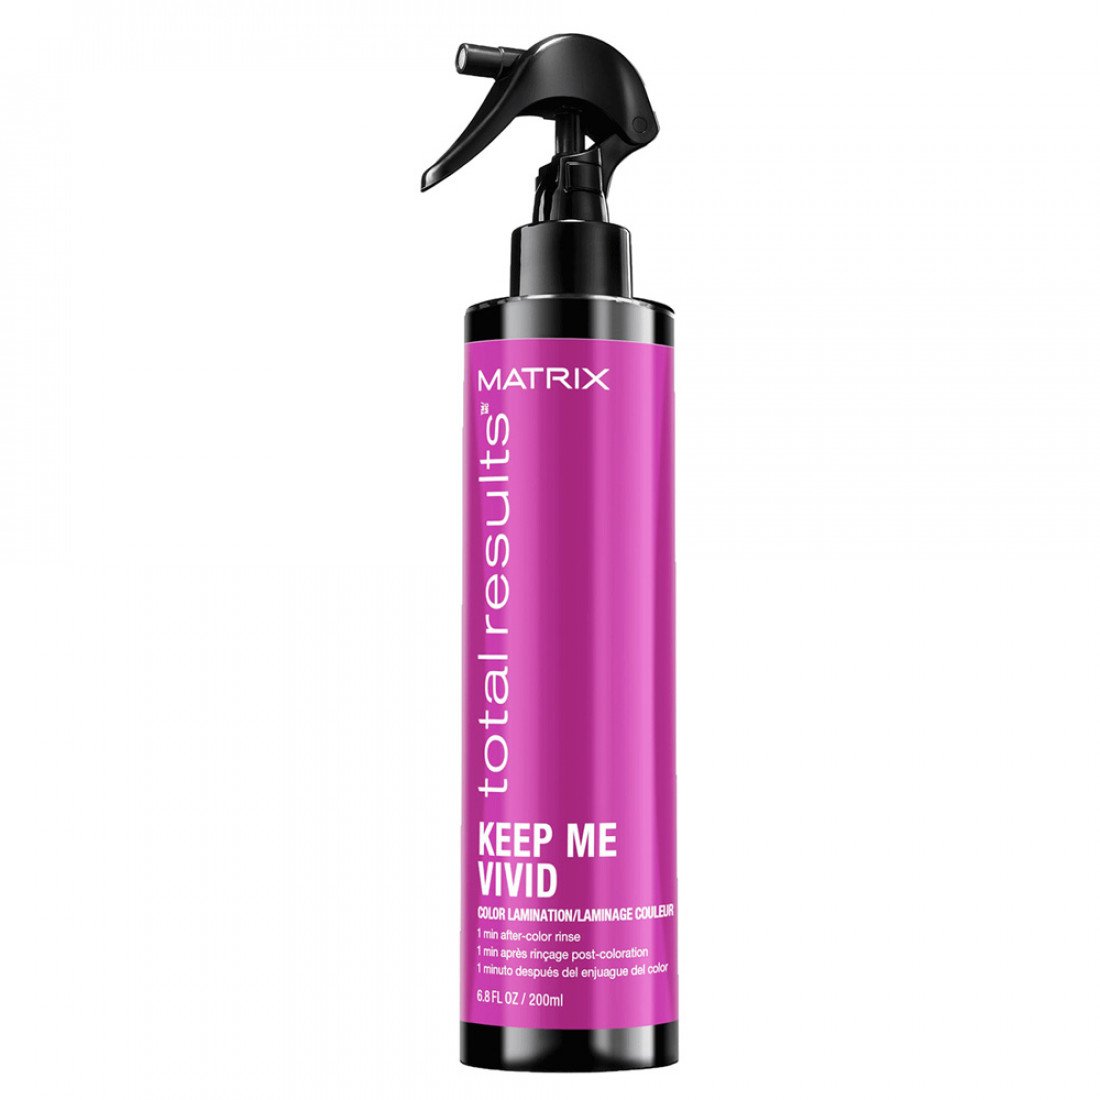 Keep Me Vivid Lamination Spray 6.8oz / 200ml - Matrix Products for Enhancing Shine and Vibrant Color